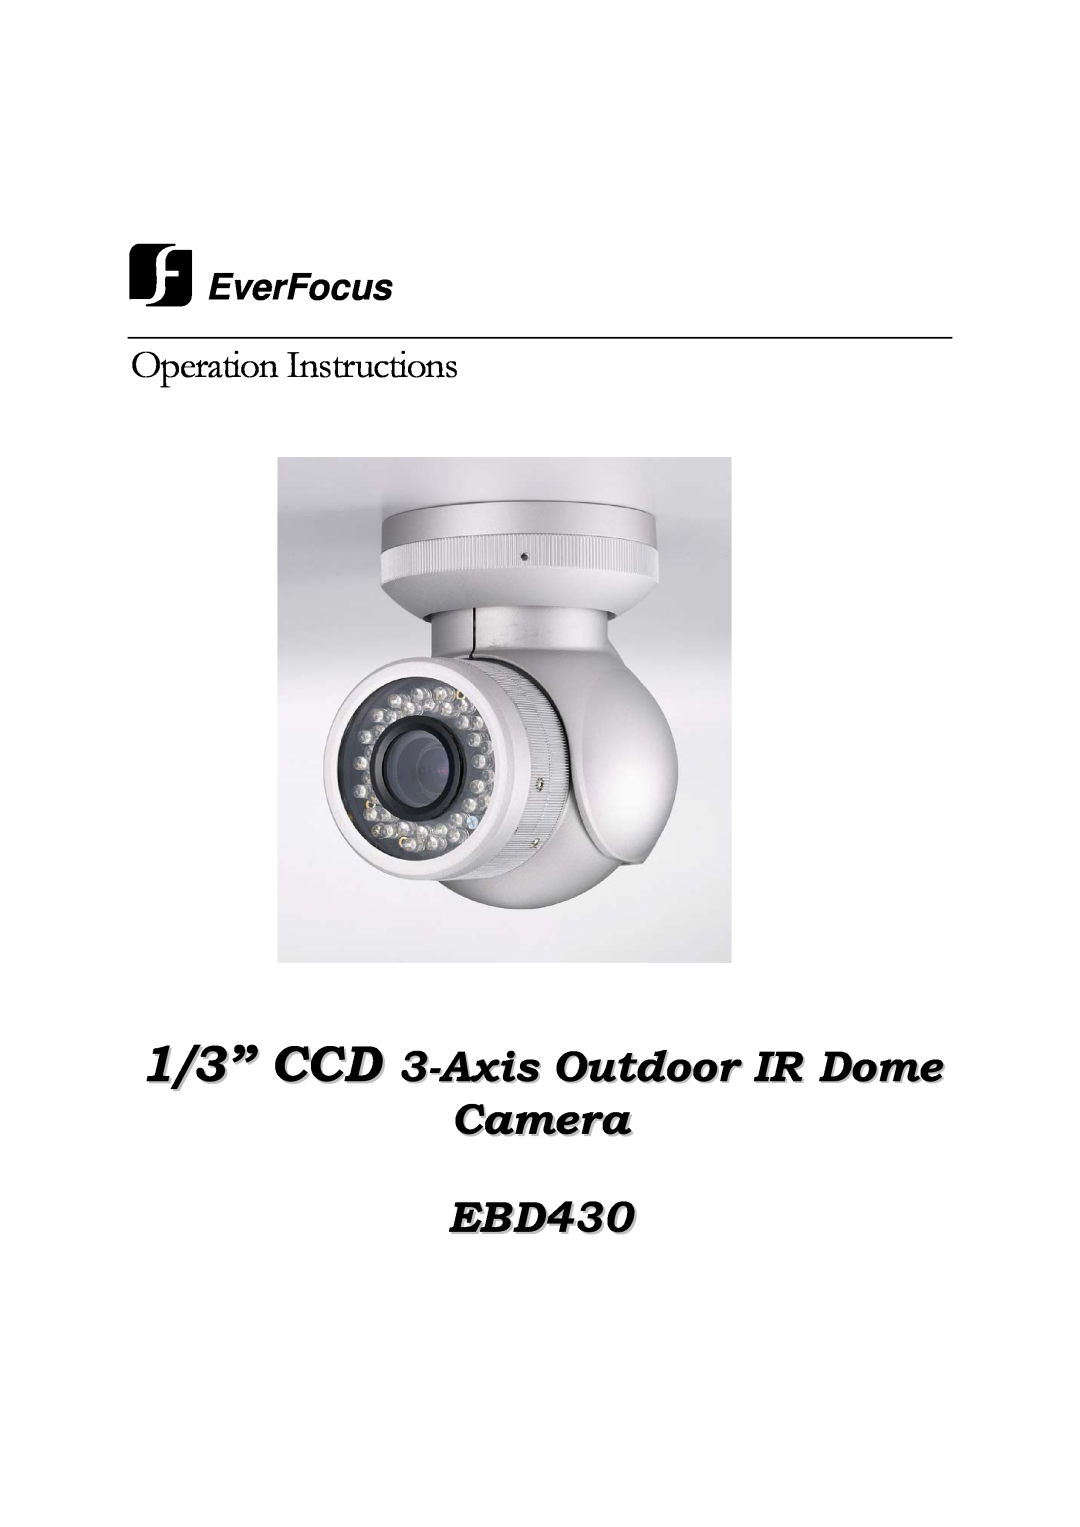 EverFocus manual 1/3” CCD 3-Axis Outdoor IR Dome Camera EBD430, Operation Instructions, EverFocus 